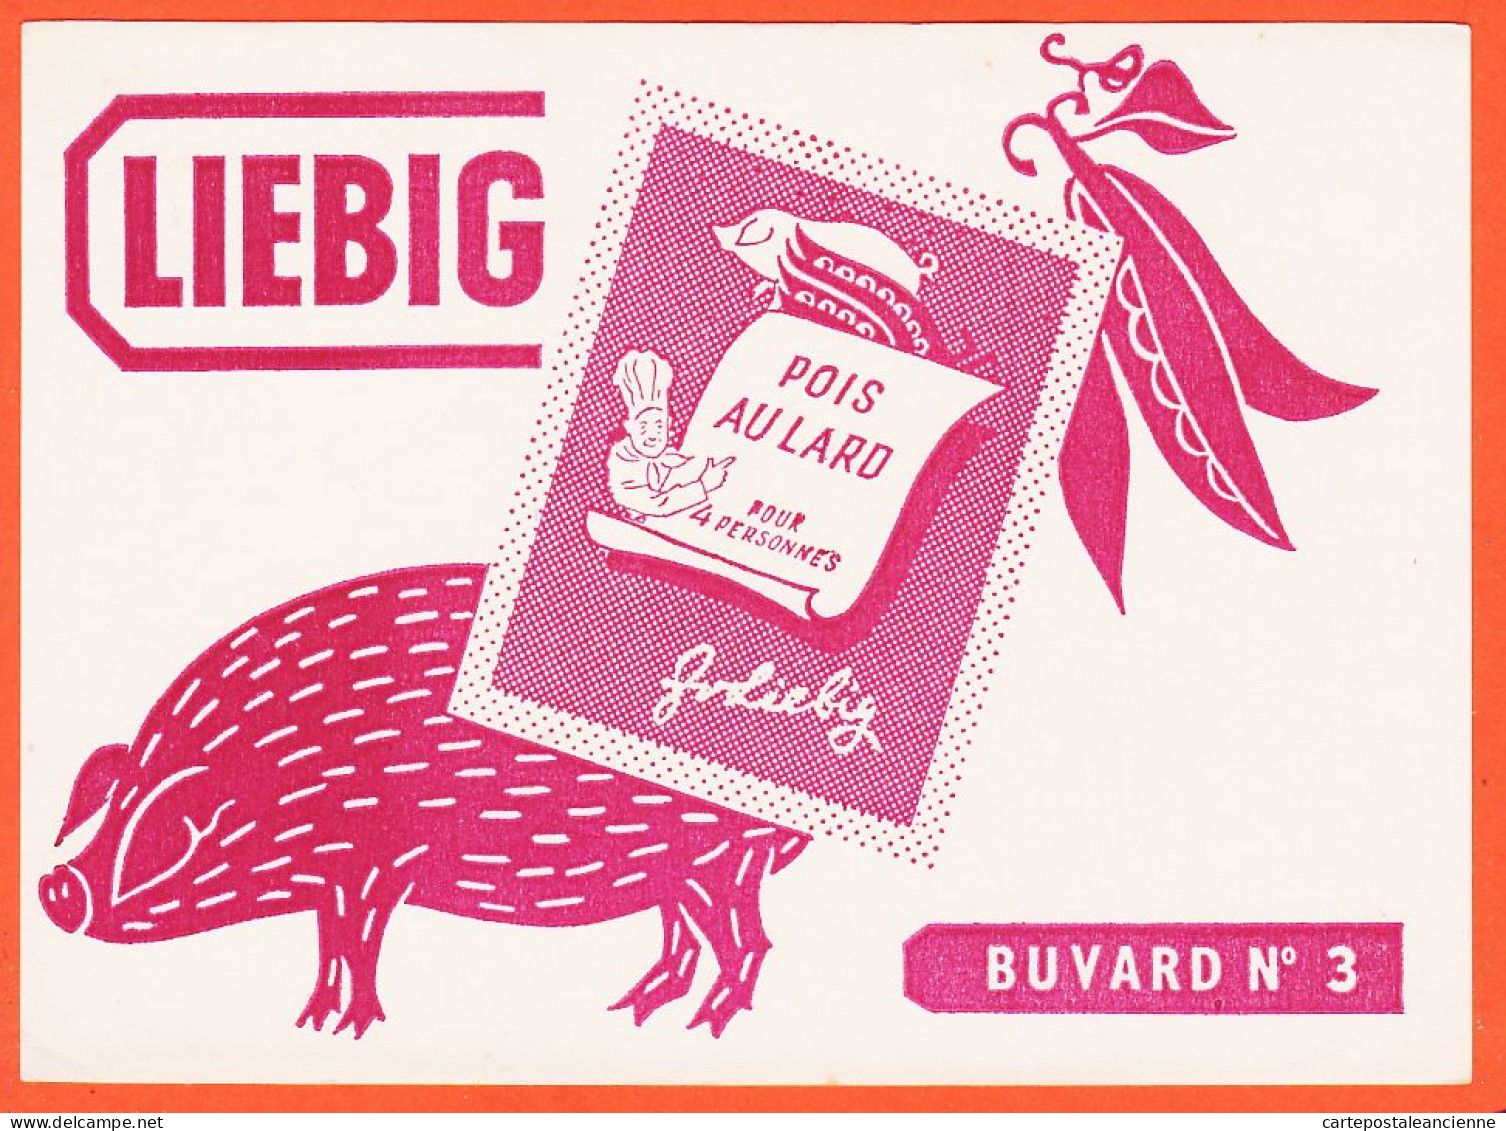 06235 / LIEBIG Cochon Pois Au Lard  Buvard N° 3 Blotter - Sopas & Salsas